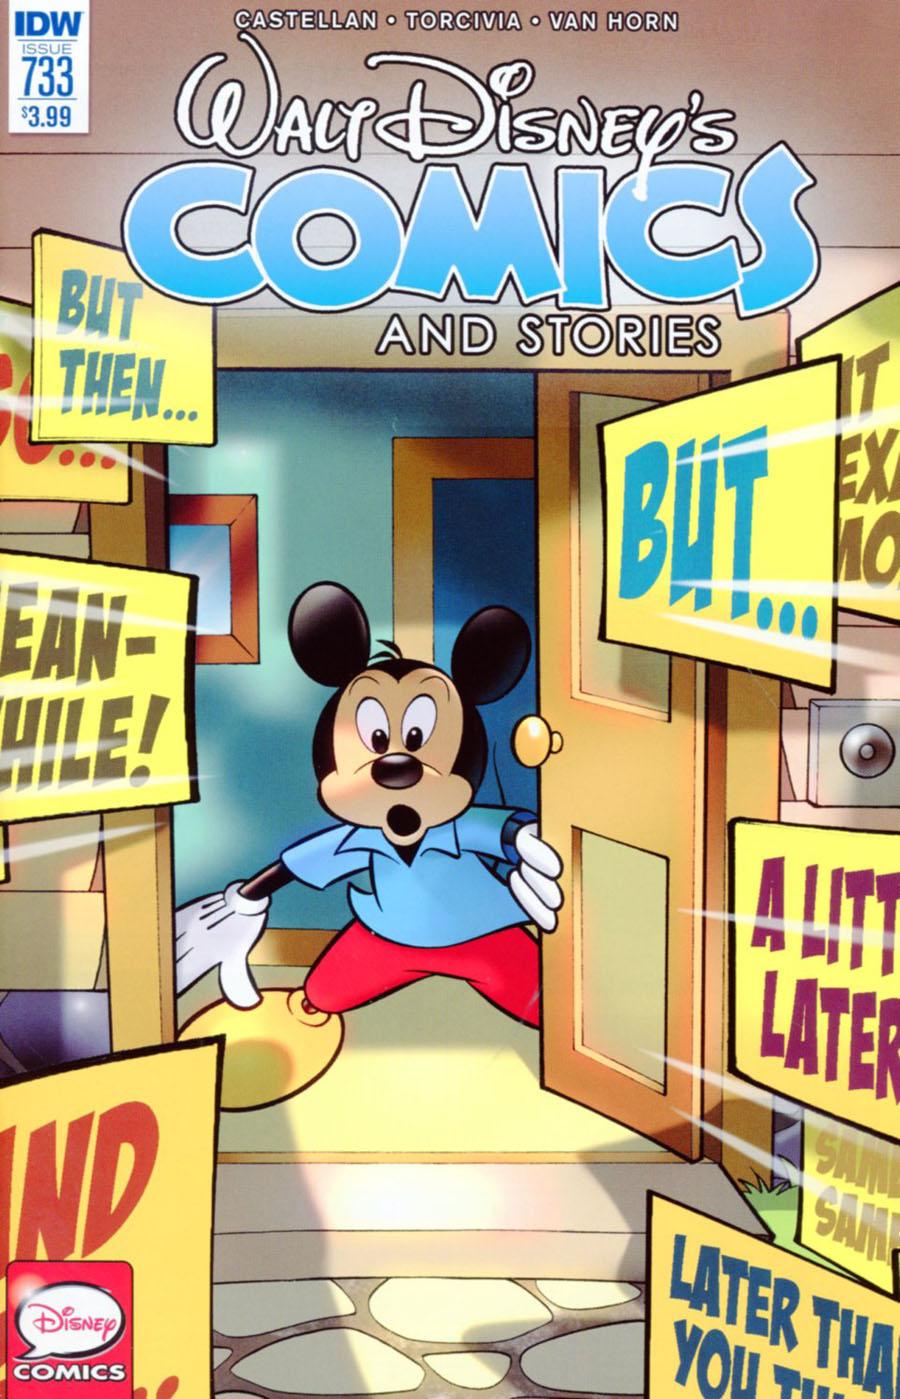 Walt Disneys Comics & Stories Vol. 1 #733